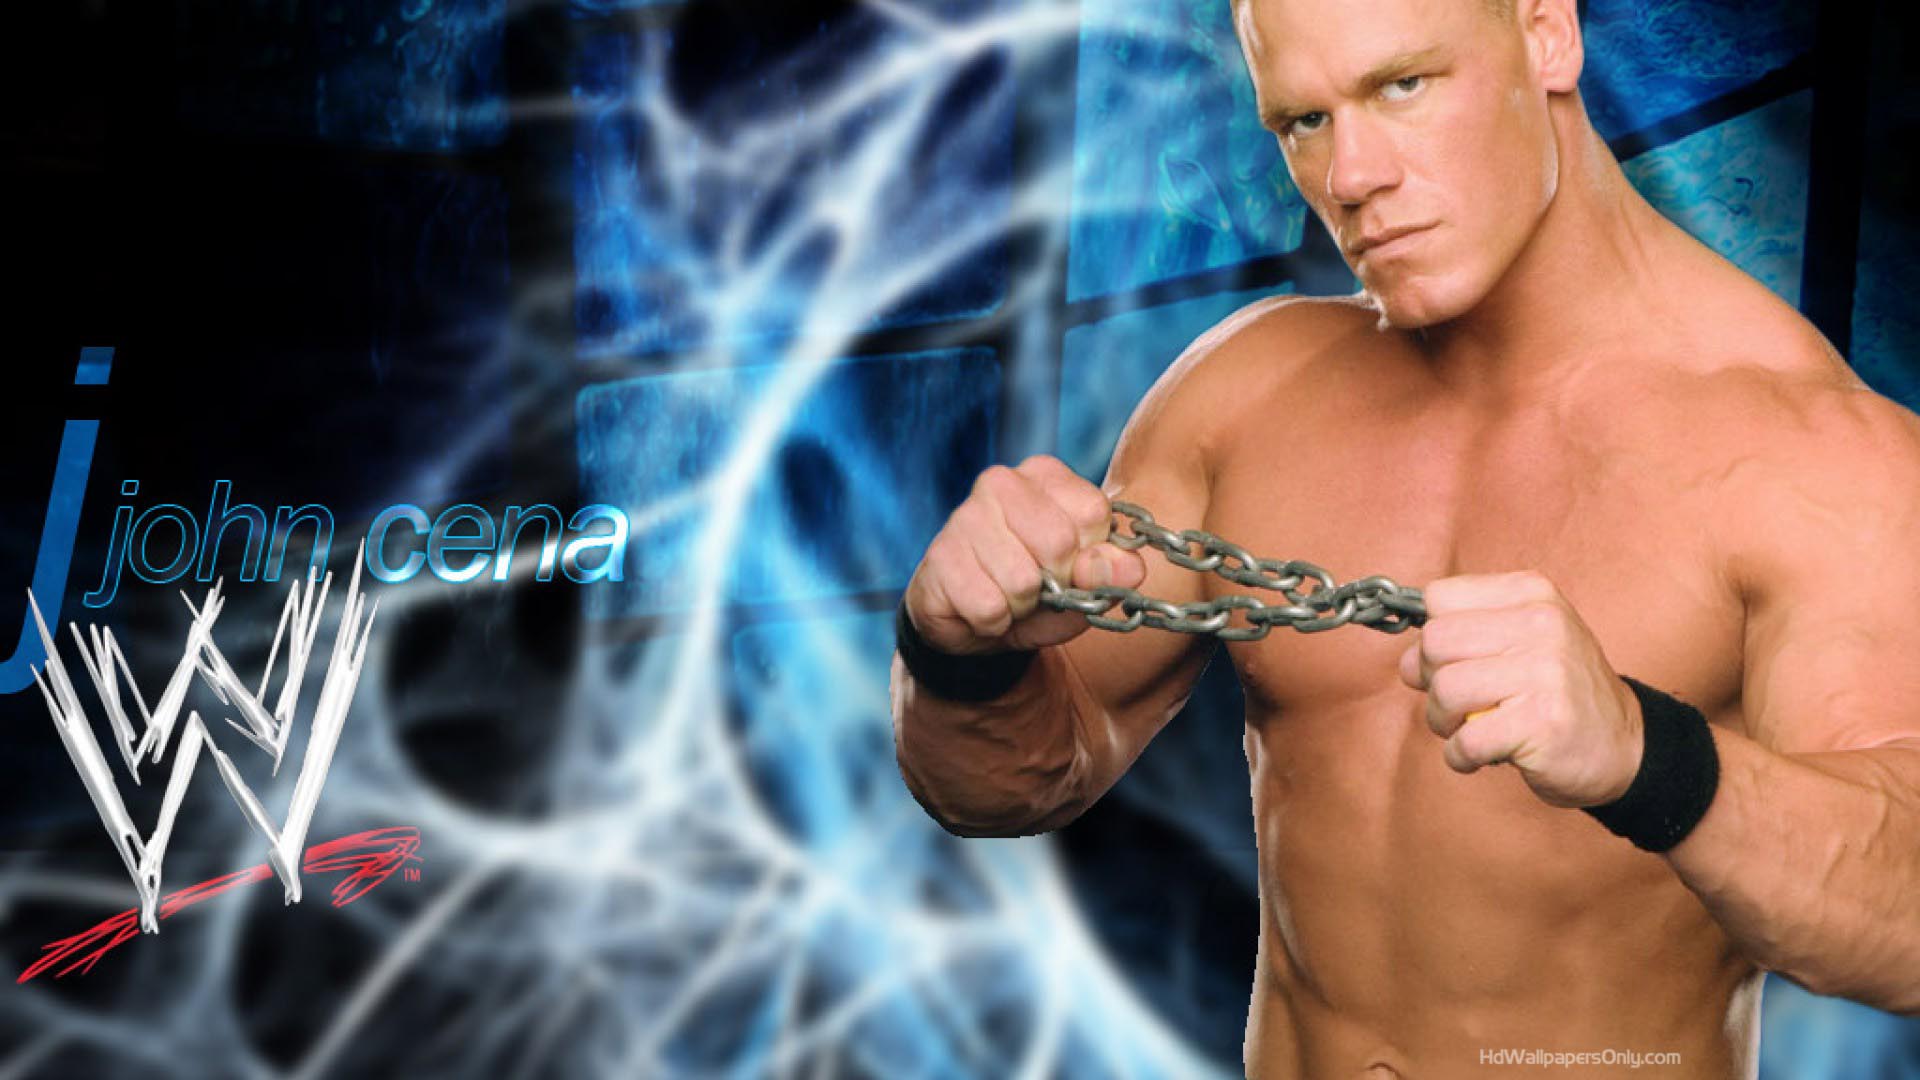 John Cena HD Wallpaper Picture